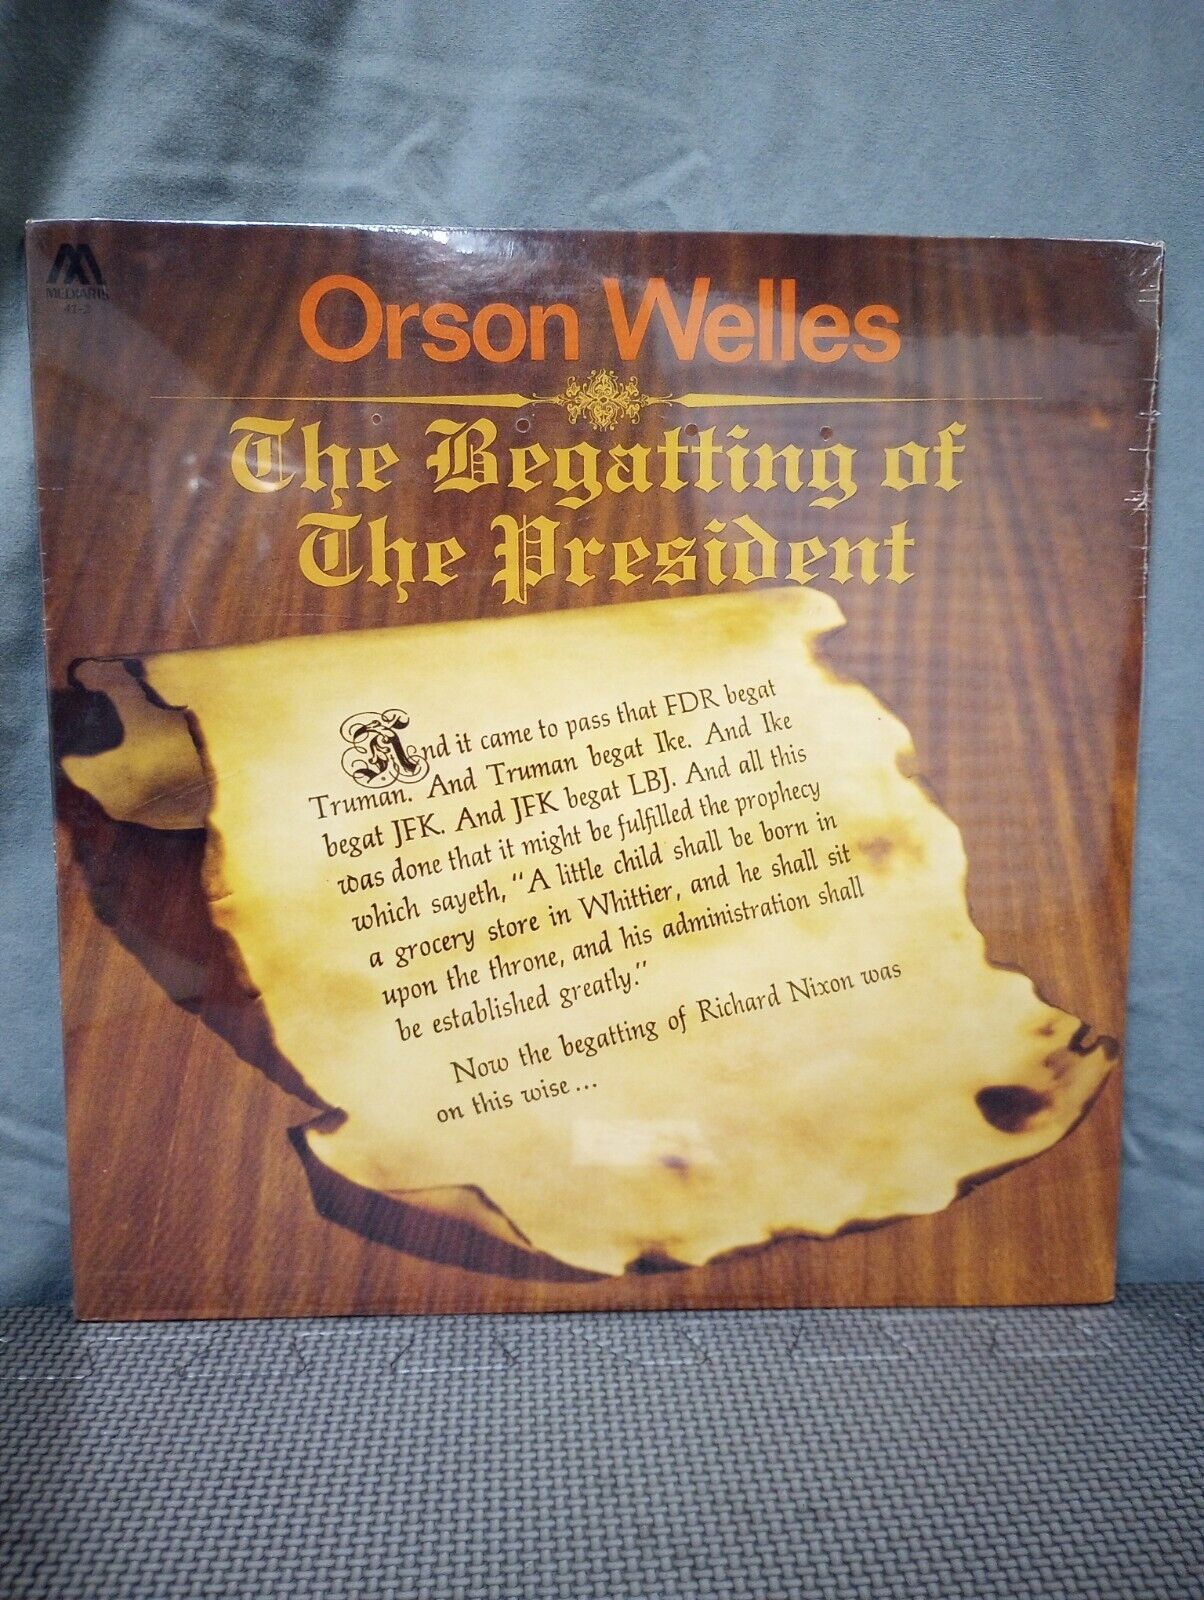 Sealed Vintage 60s Begetting Of The President Wells Vinyl Record Album LP 1969